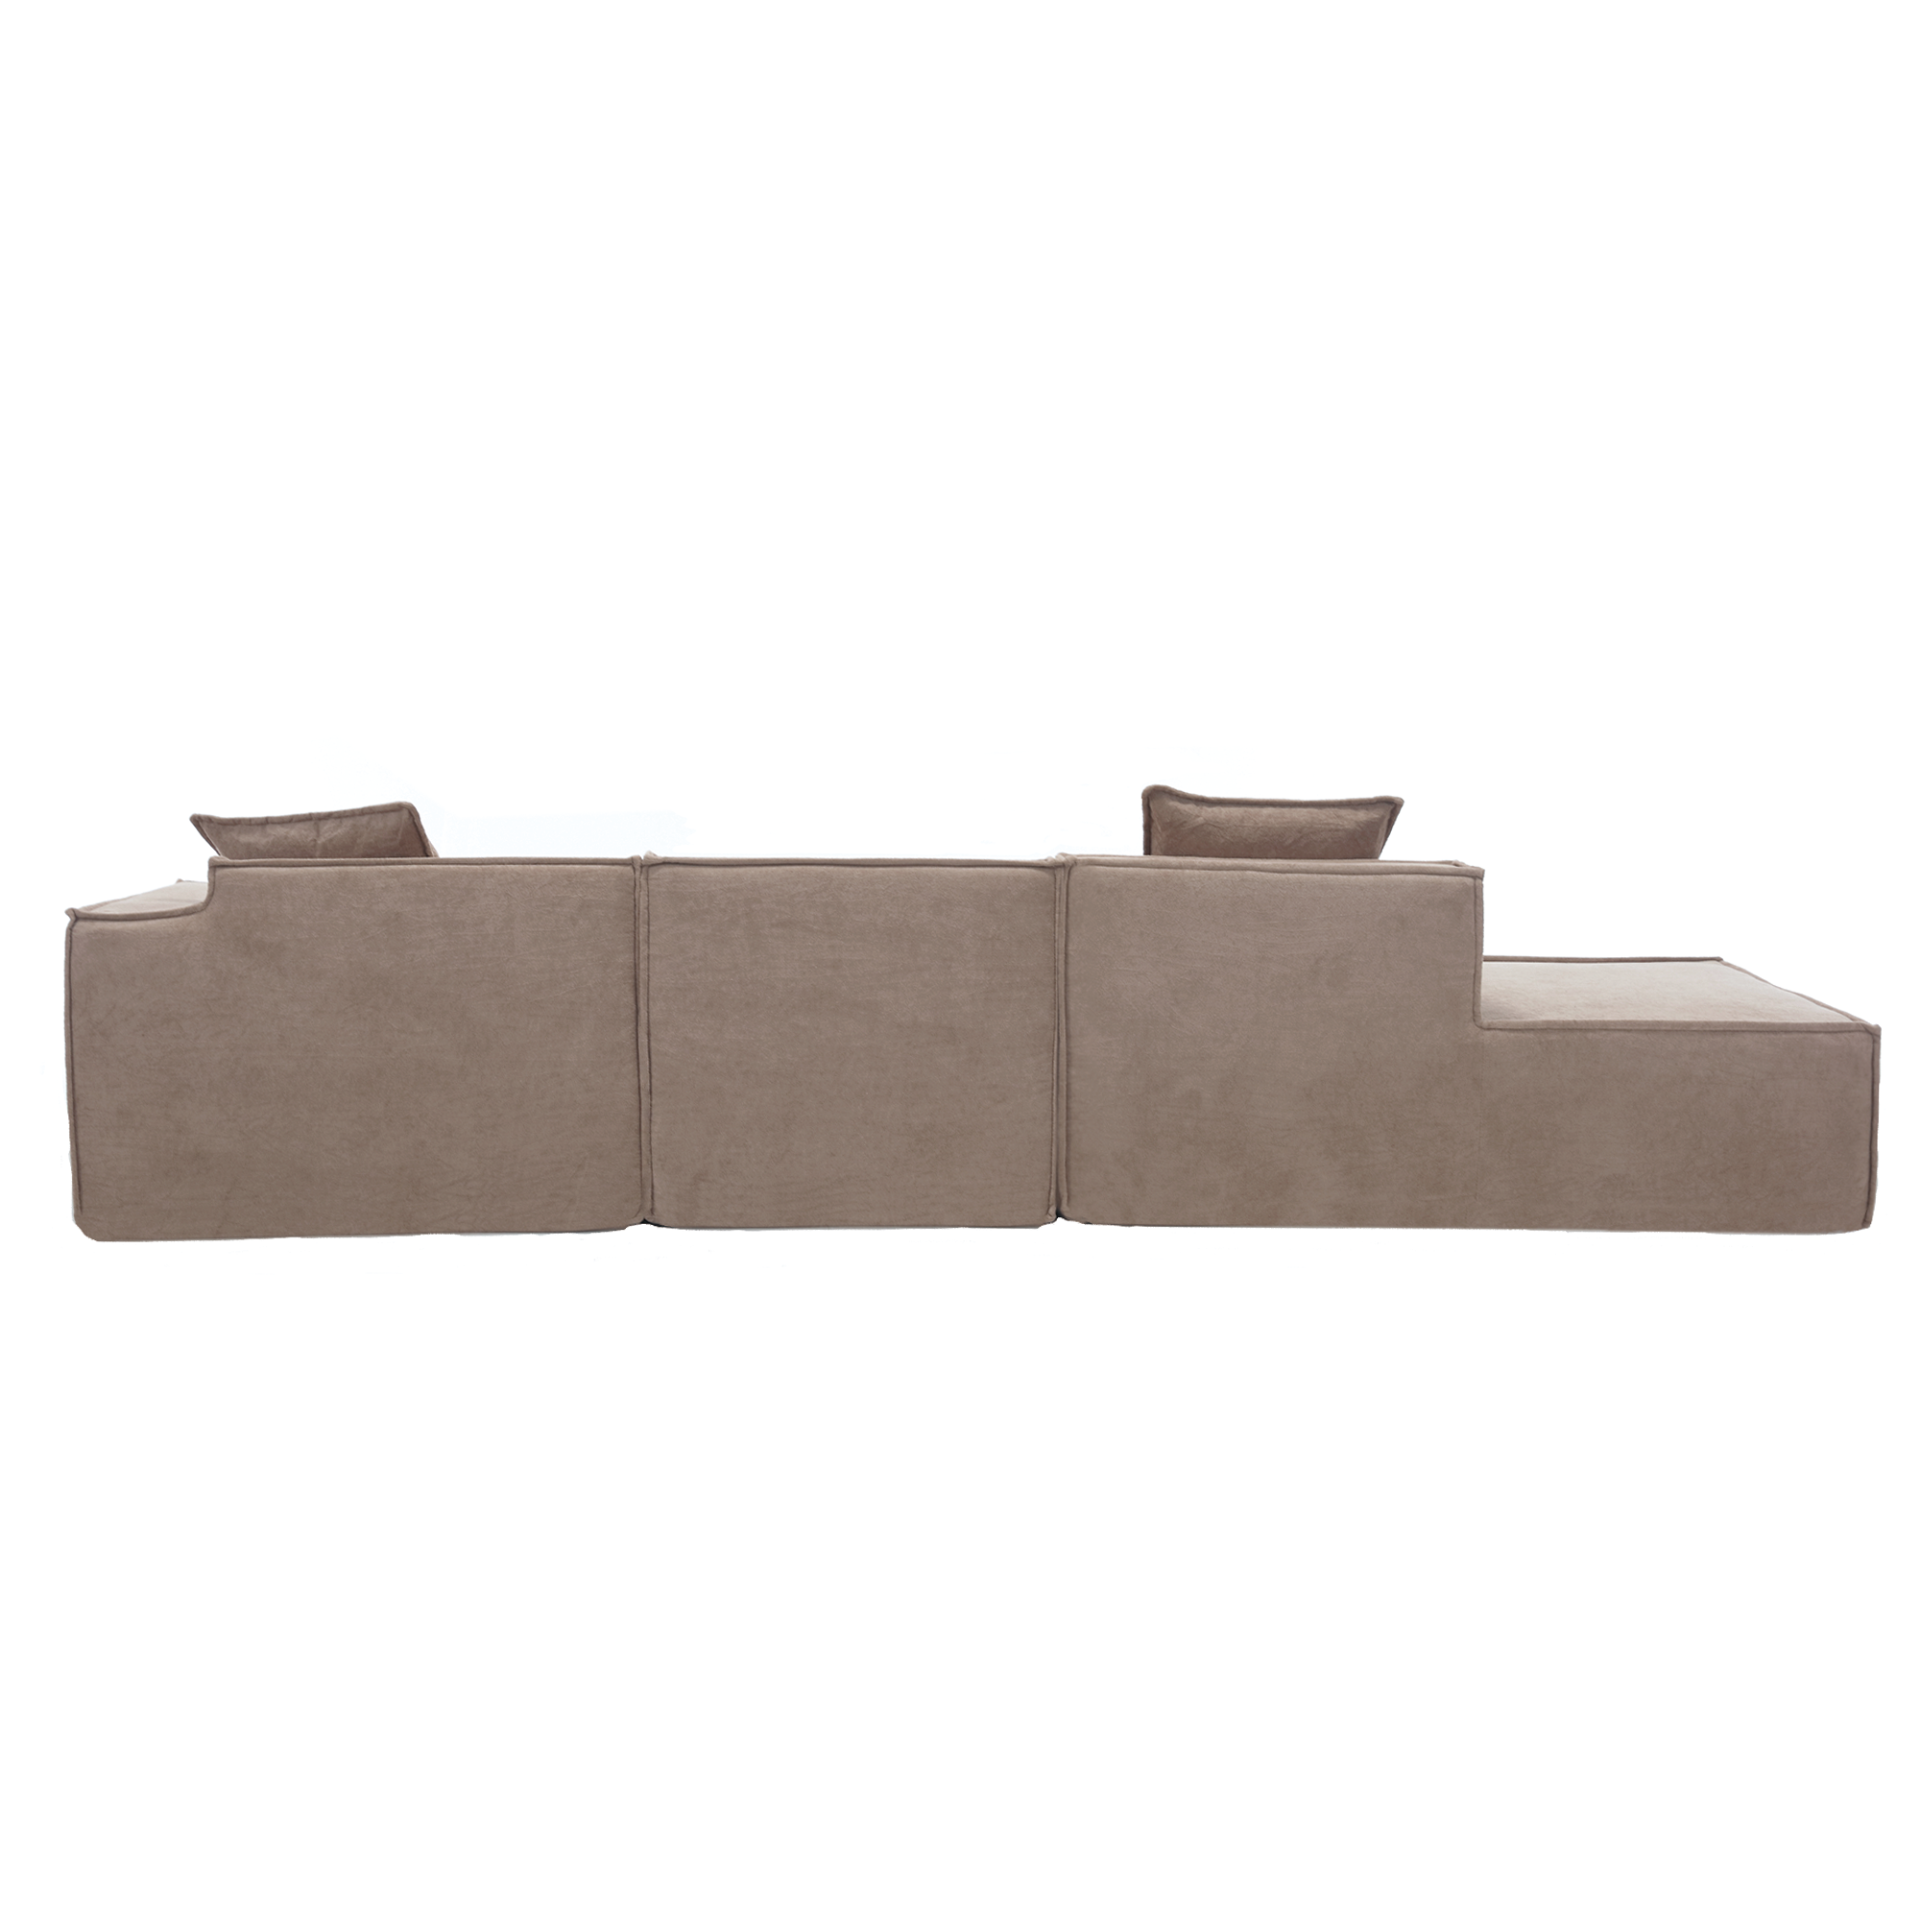 Modular combination living room sofa set, modern minimalist sofa, free installation sofa, L-shaped, Italian minimalist tofu block sofa,  Right-Hand Facing,Light Brown, Goodies N Stuff